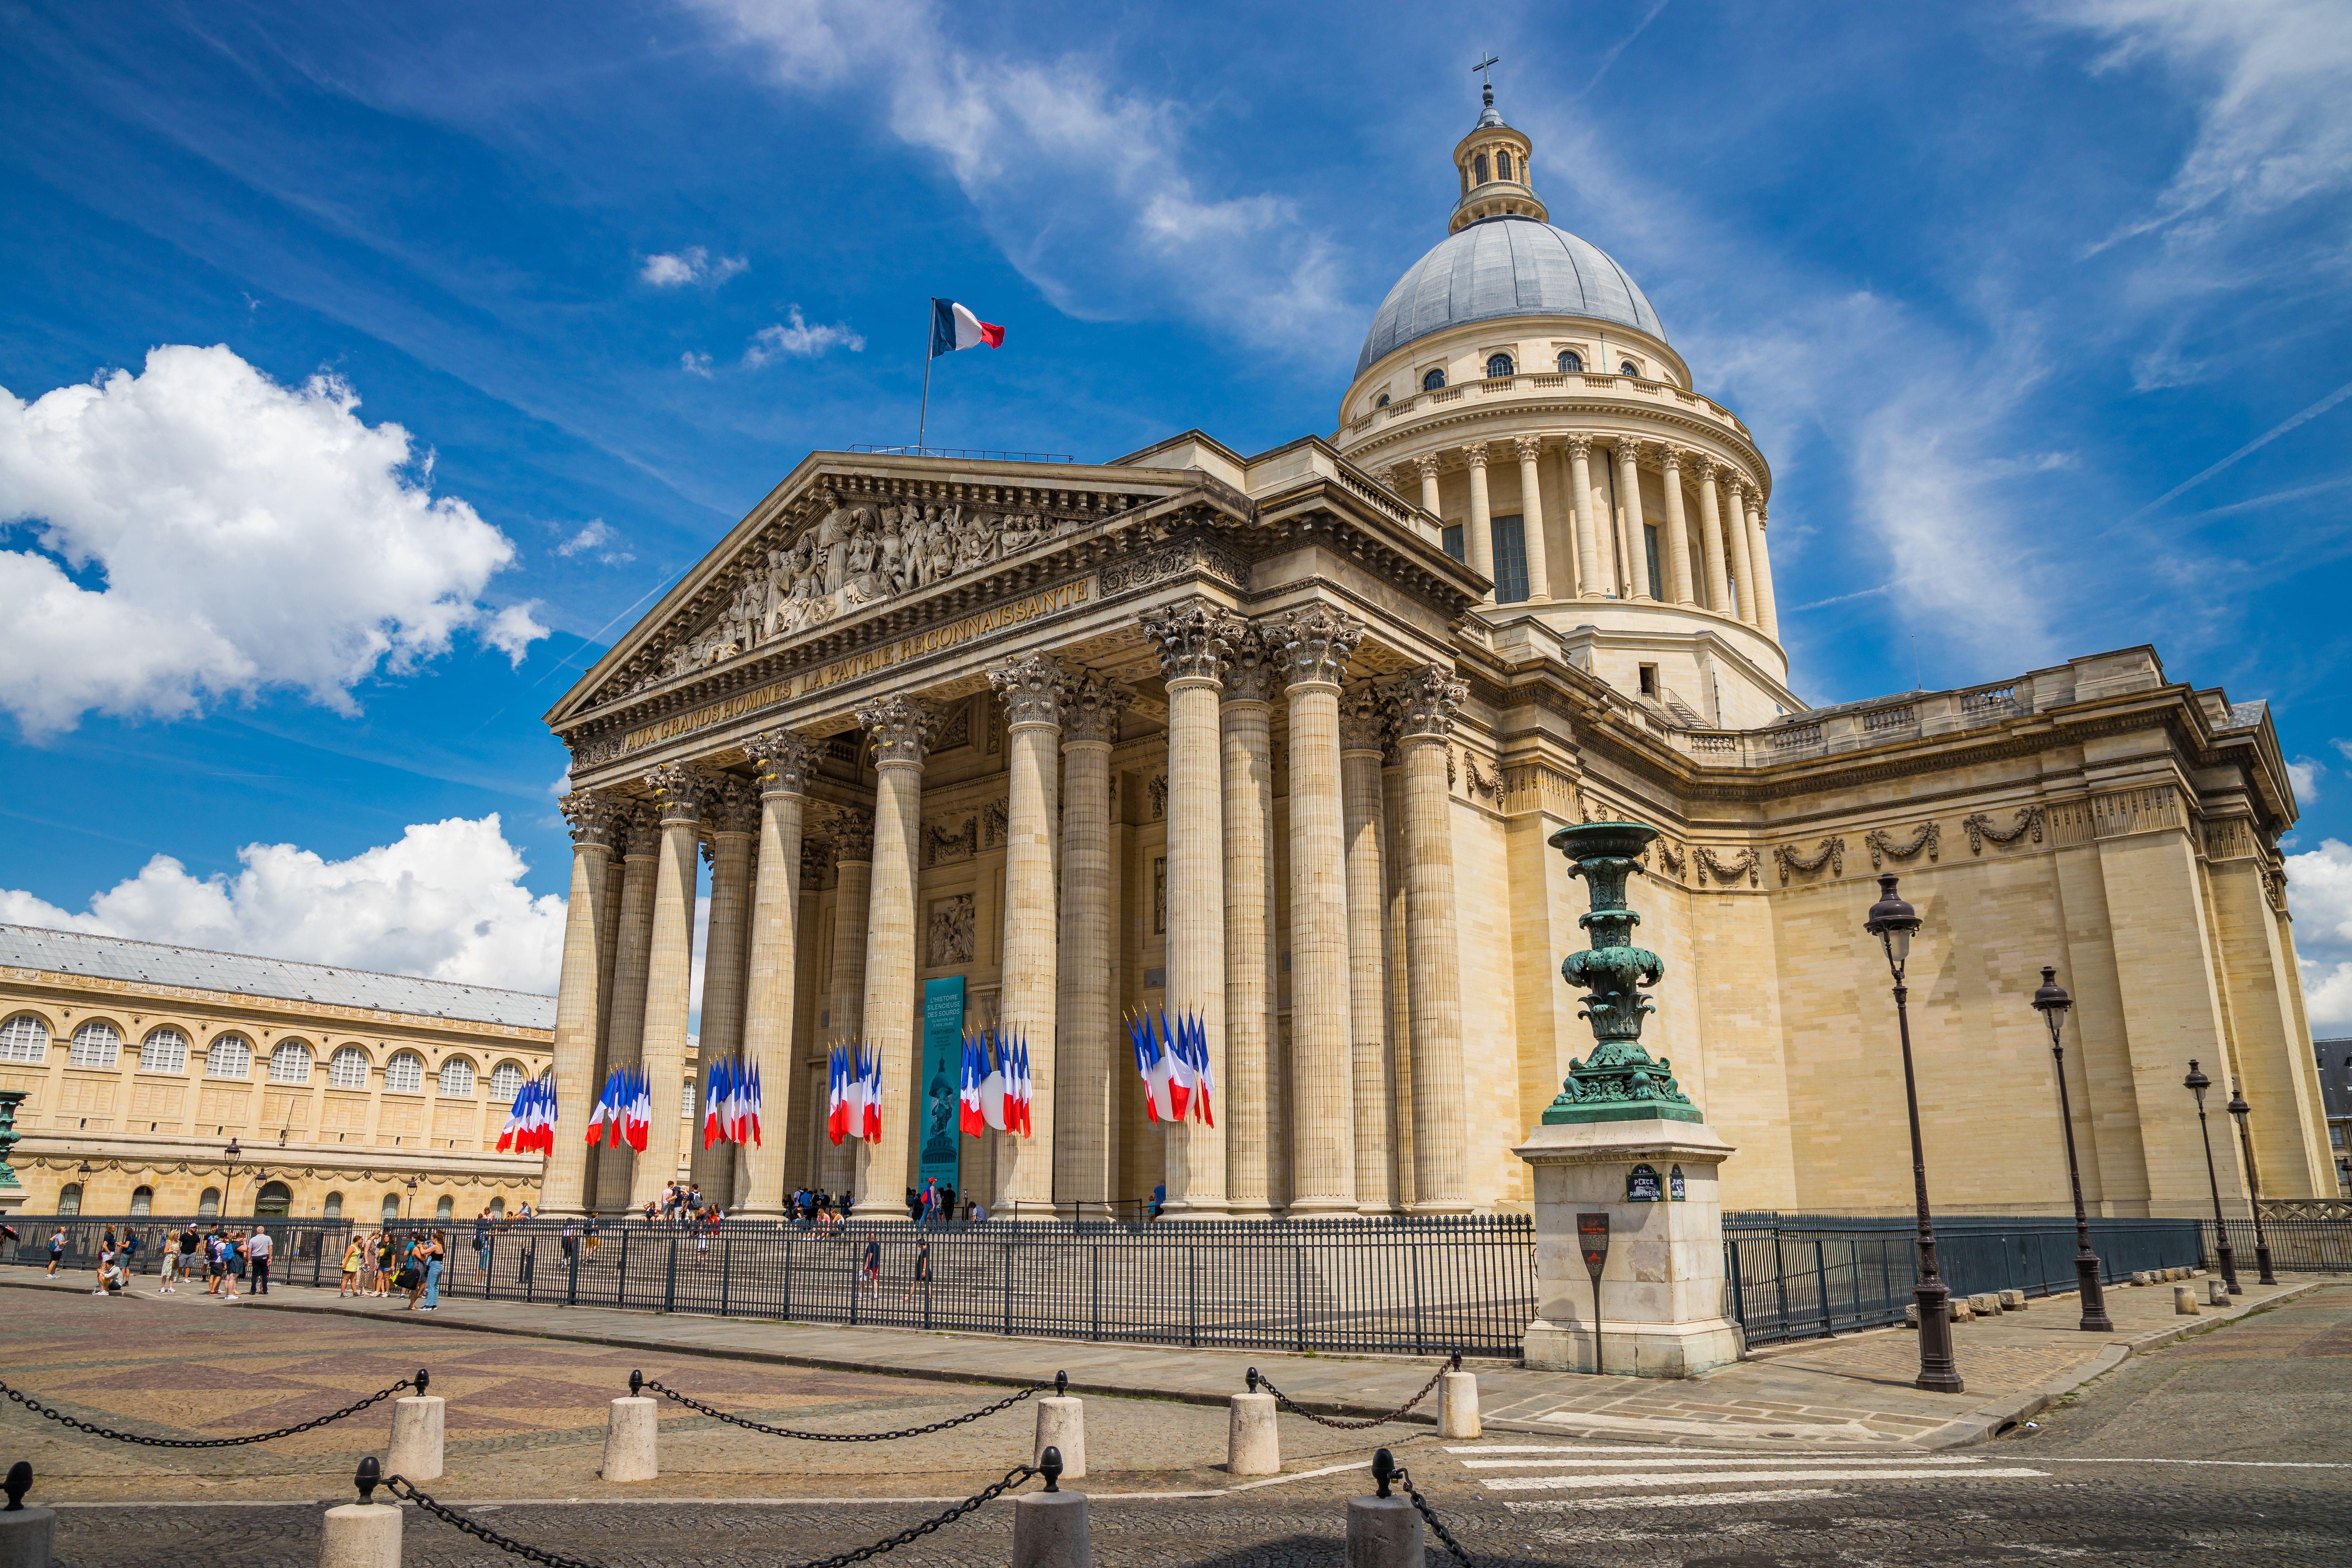 The Pantheon building in Paris France